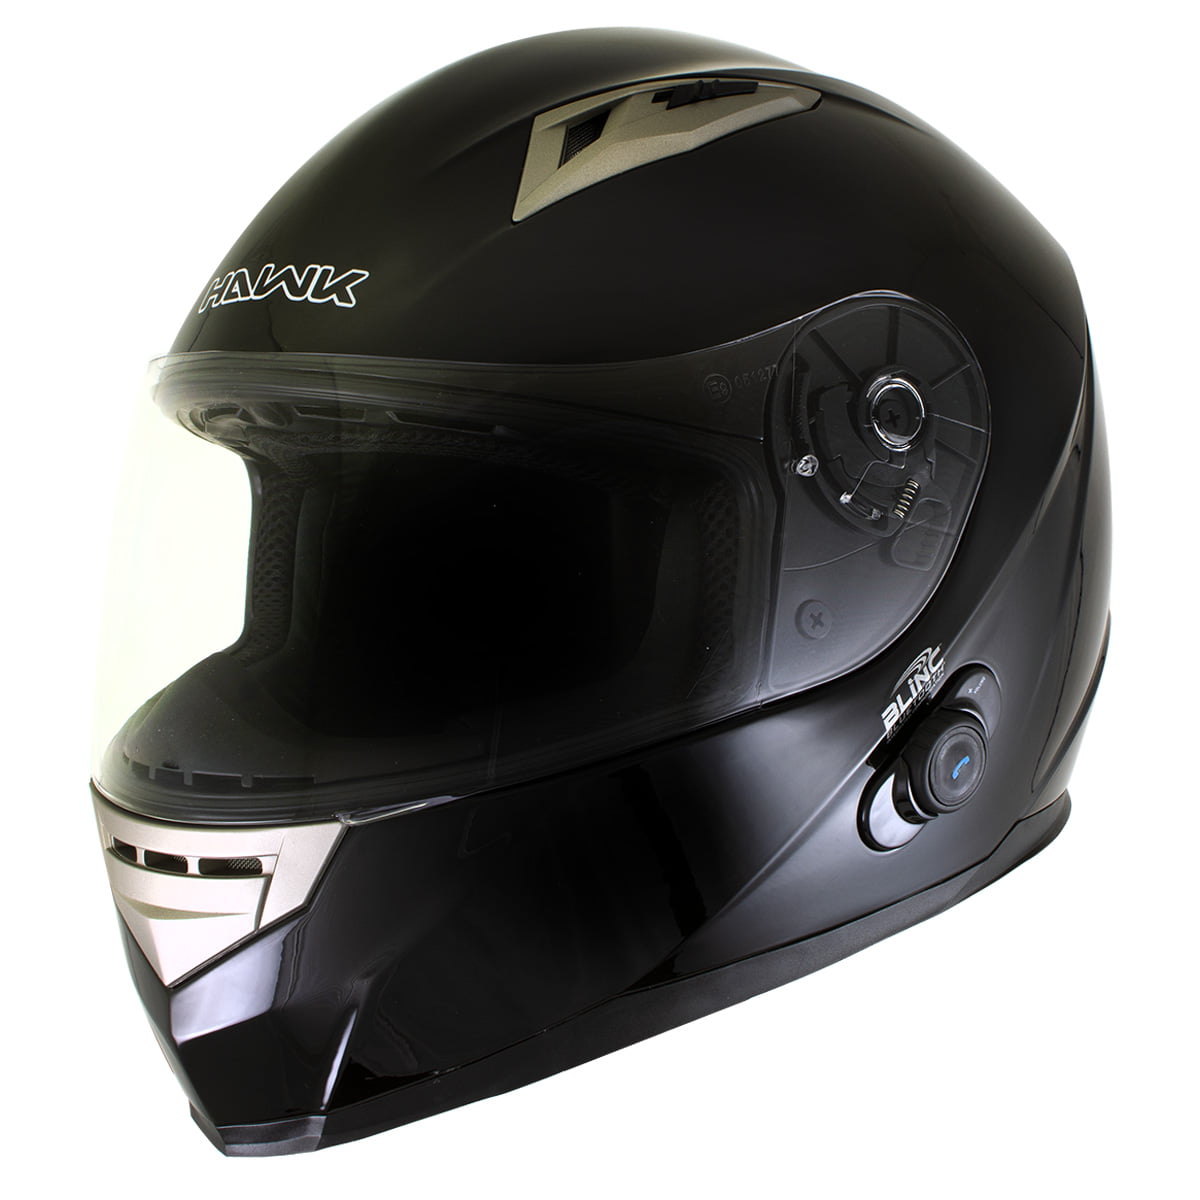 Hawk H-510 Glossy Black Bluetooth Full Face Motorcycle Helmet Gloss Black - Walmart.com